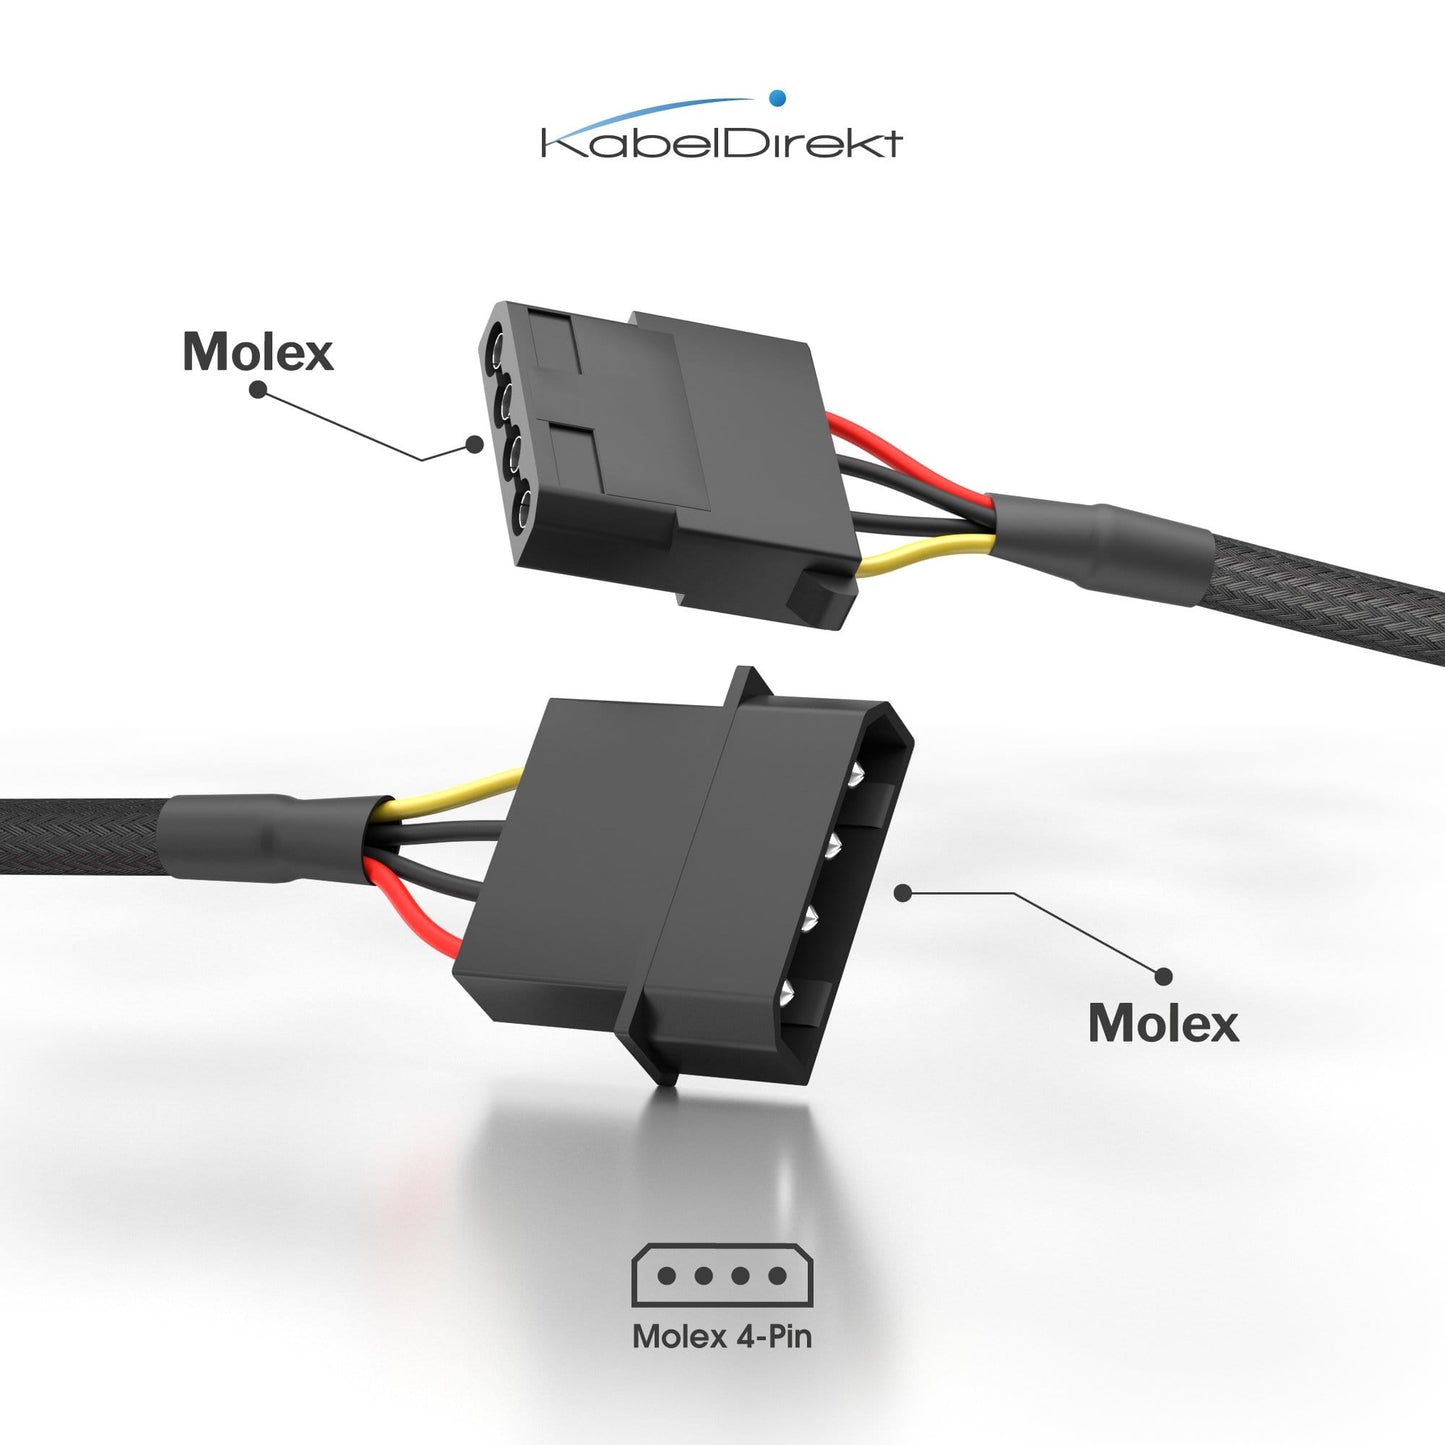 PC Cables - Molex Extension Cables, Molex Y-Power Cables, SATA Adapters